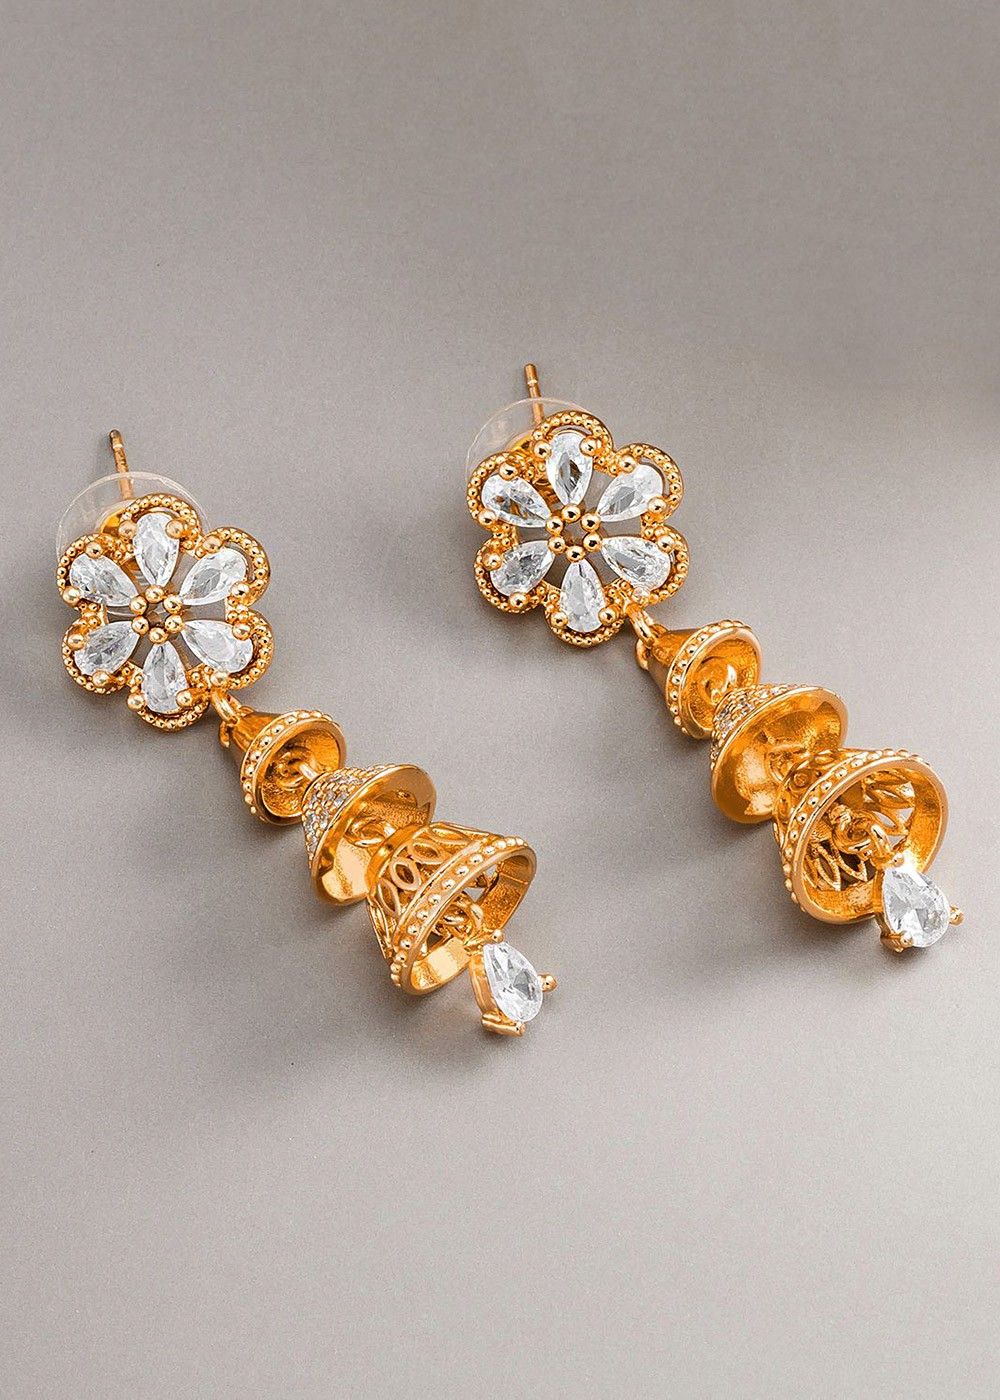 Discover 62+ gold party wear earrings best